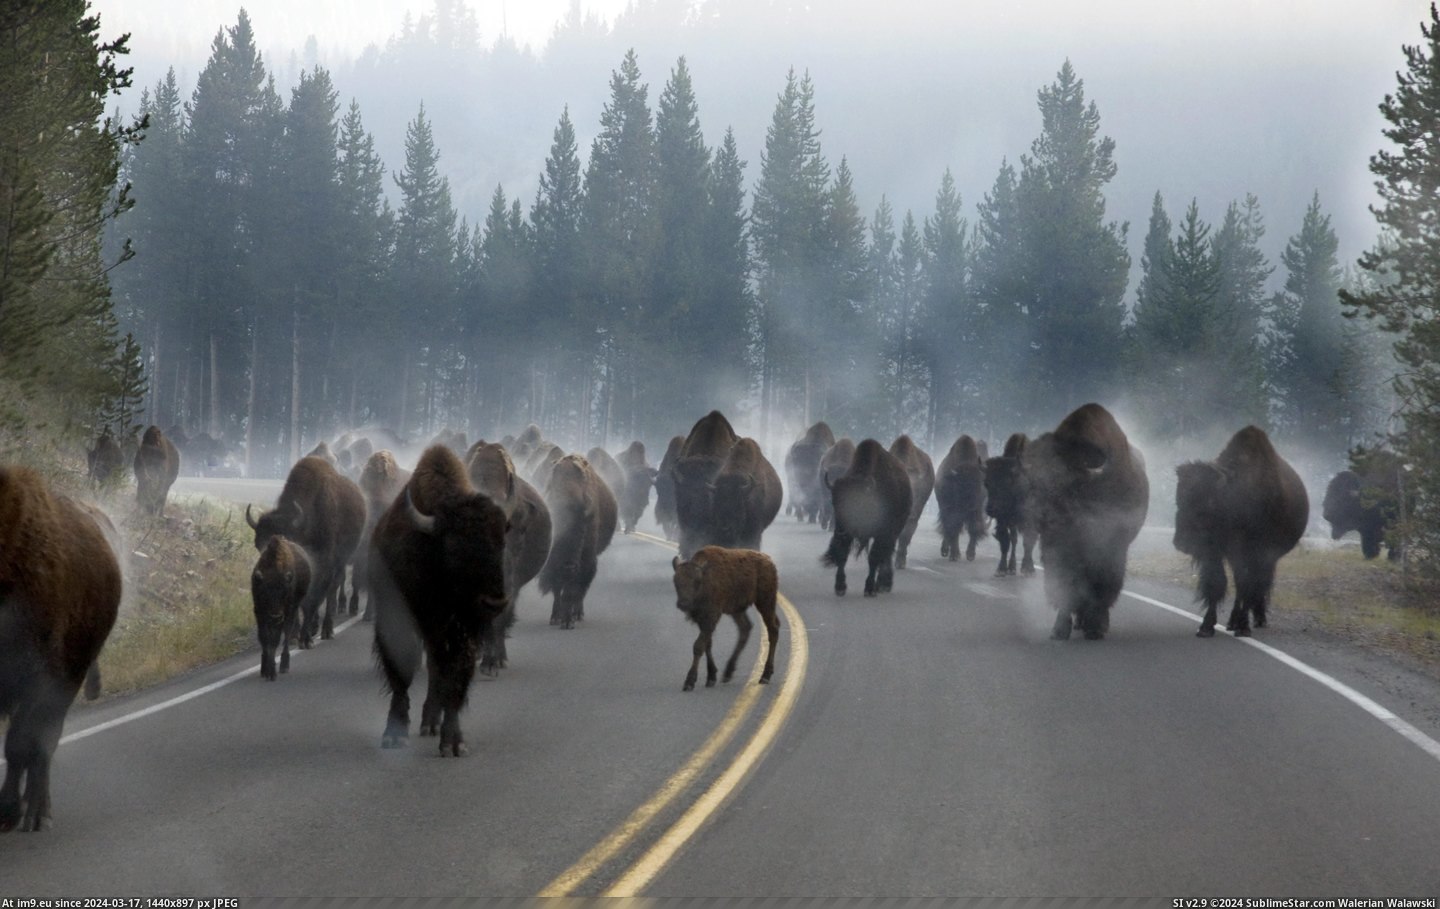 #Park #Morning #Traffic #Yellowstone #Rush #National #Hour [Pics] Morning rush hour traffic in Yellowstone National Park Pic. (Obraz z album My r/PICS favs))